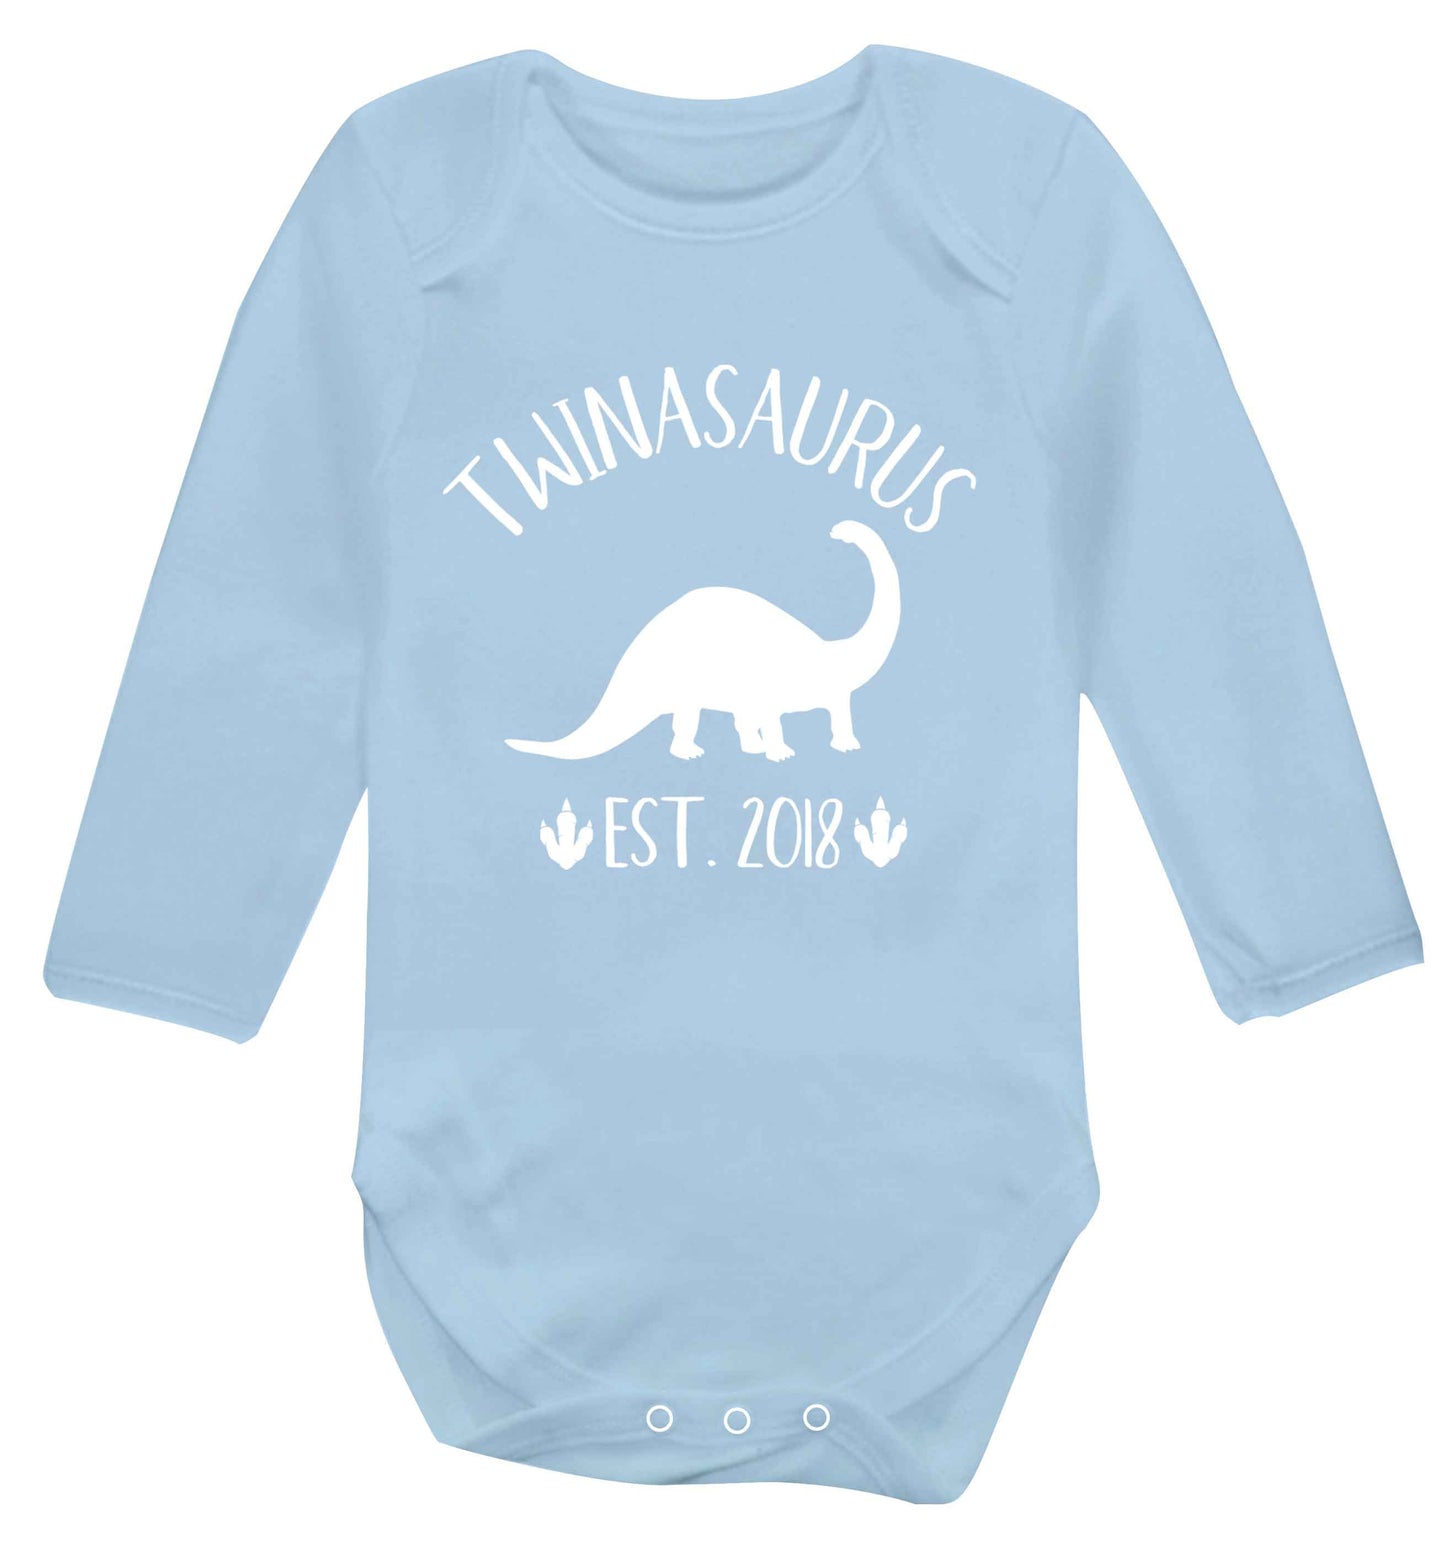 Personalised twinasaurus since (custom date) Baby Vest long sleeved pale blue 6-12 months